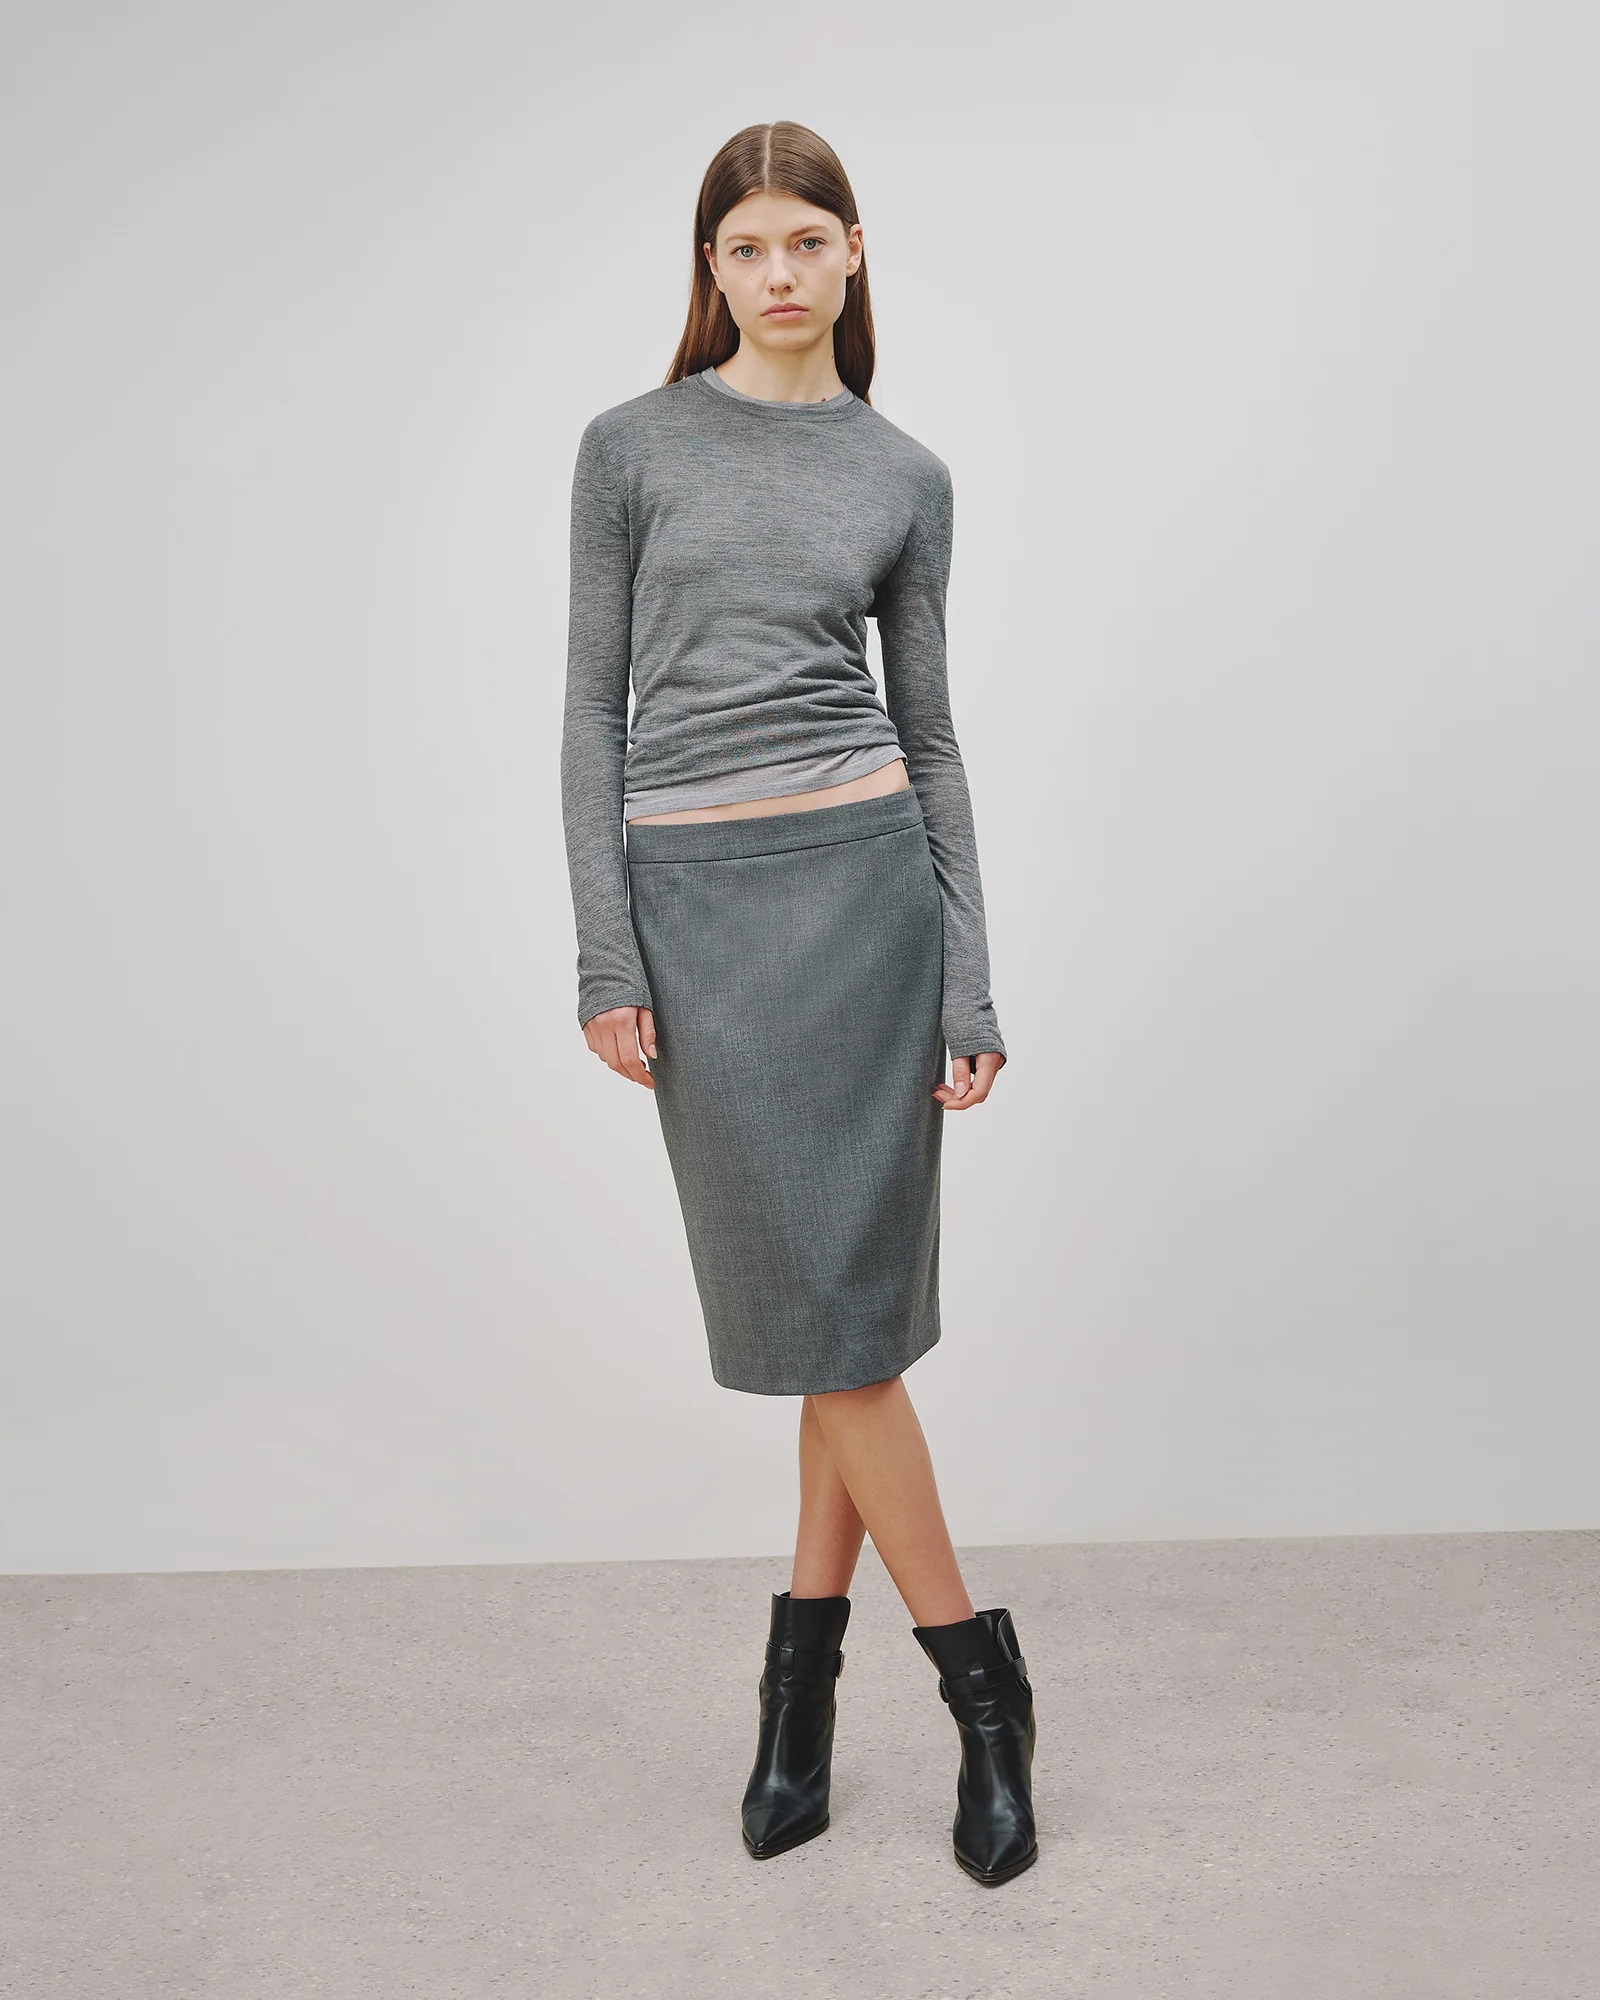 NILI LOTAN Silk Knit Sweater Candice in Dark Grey Melange XS